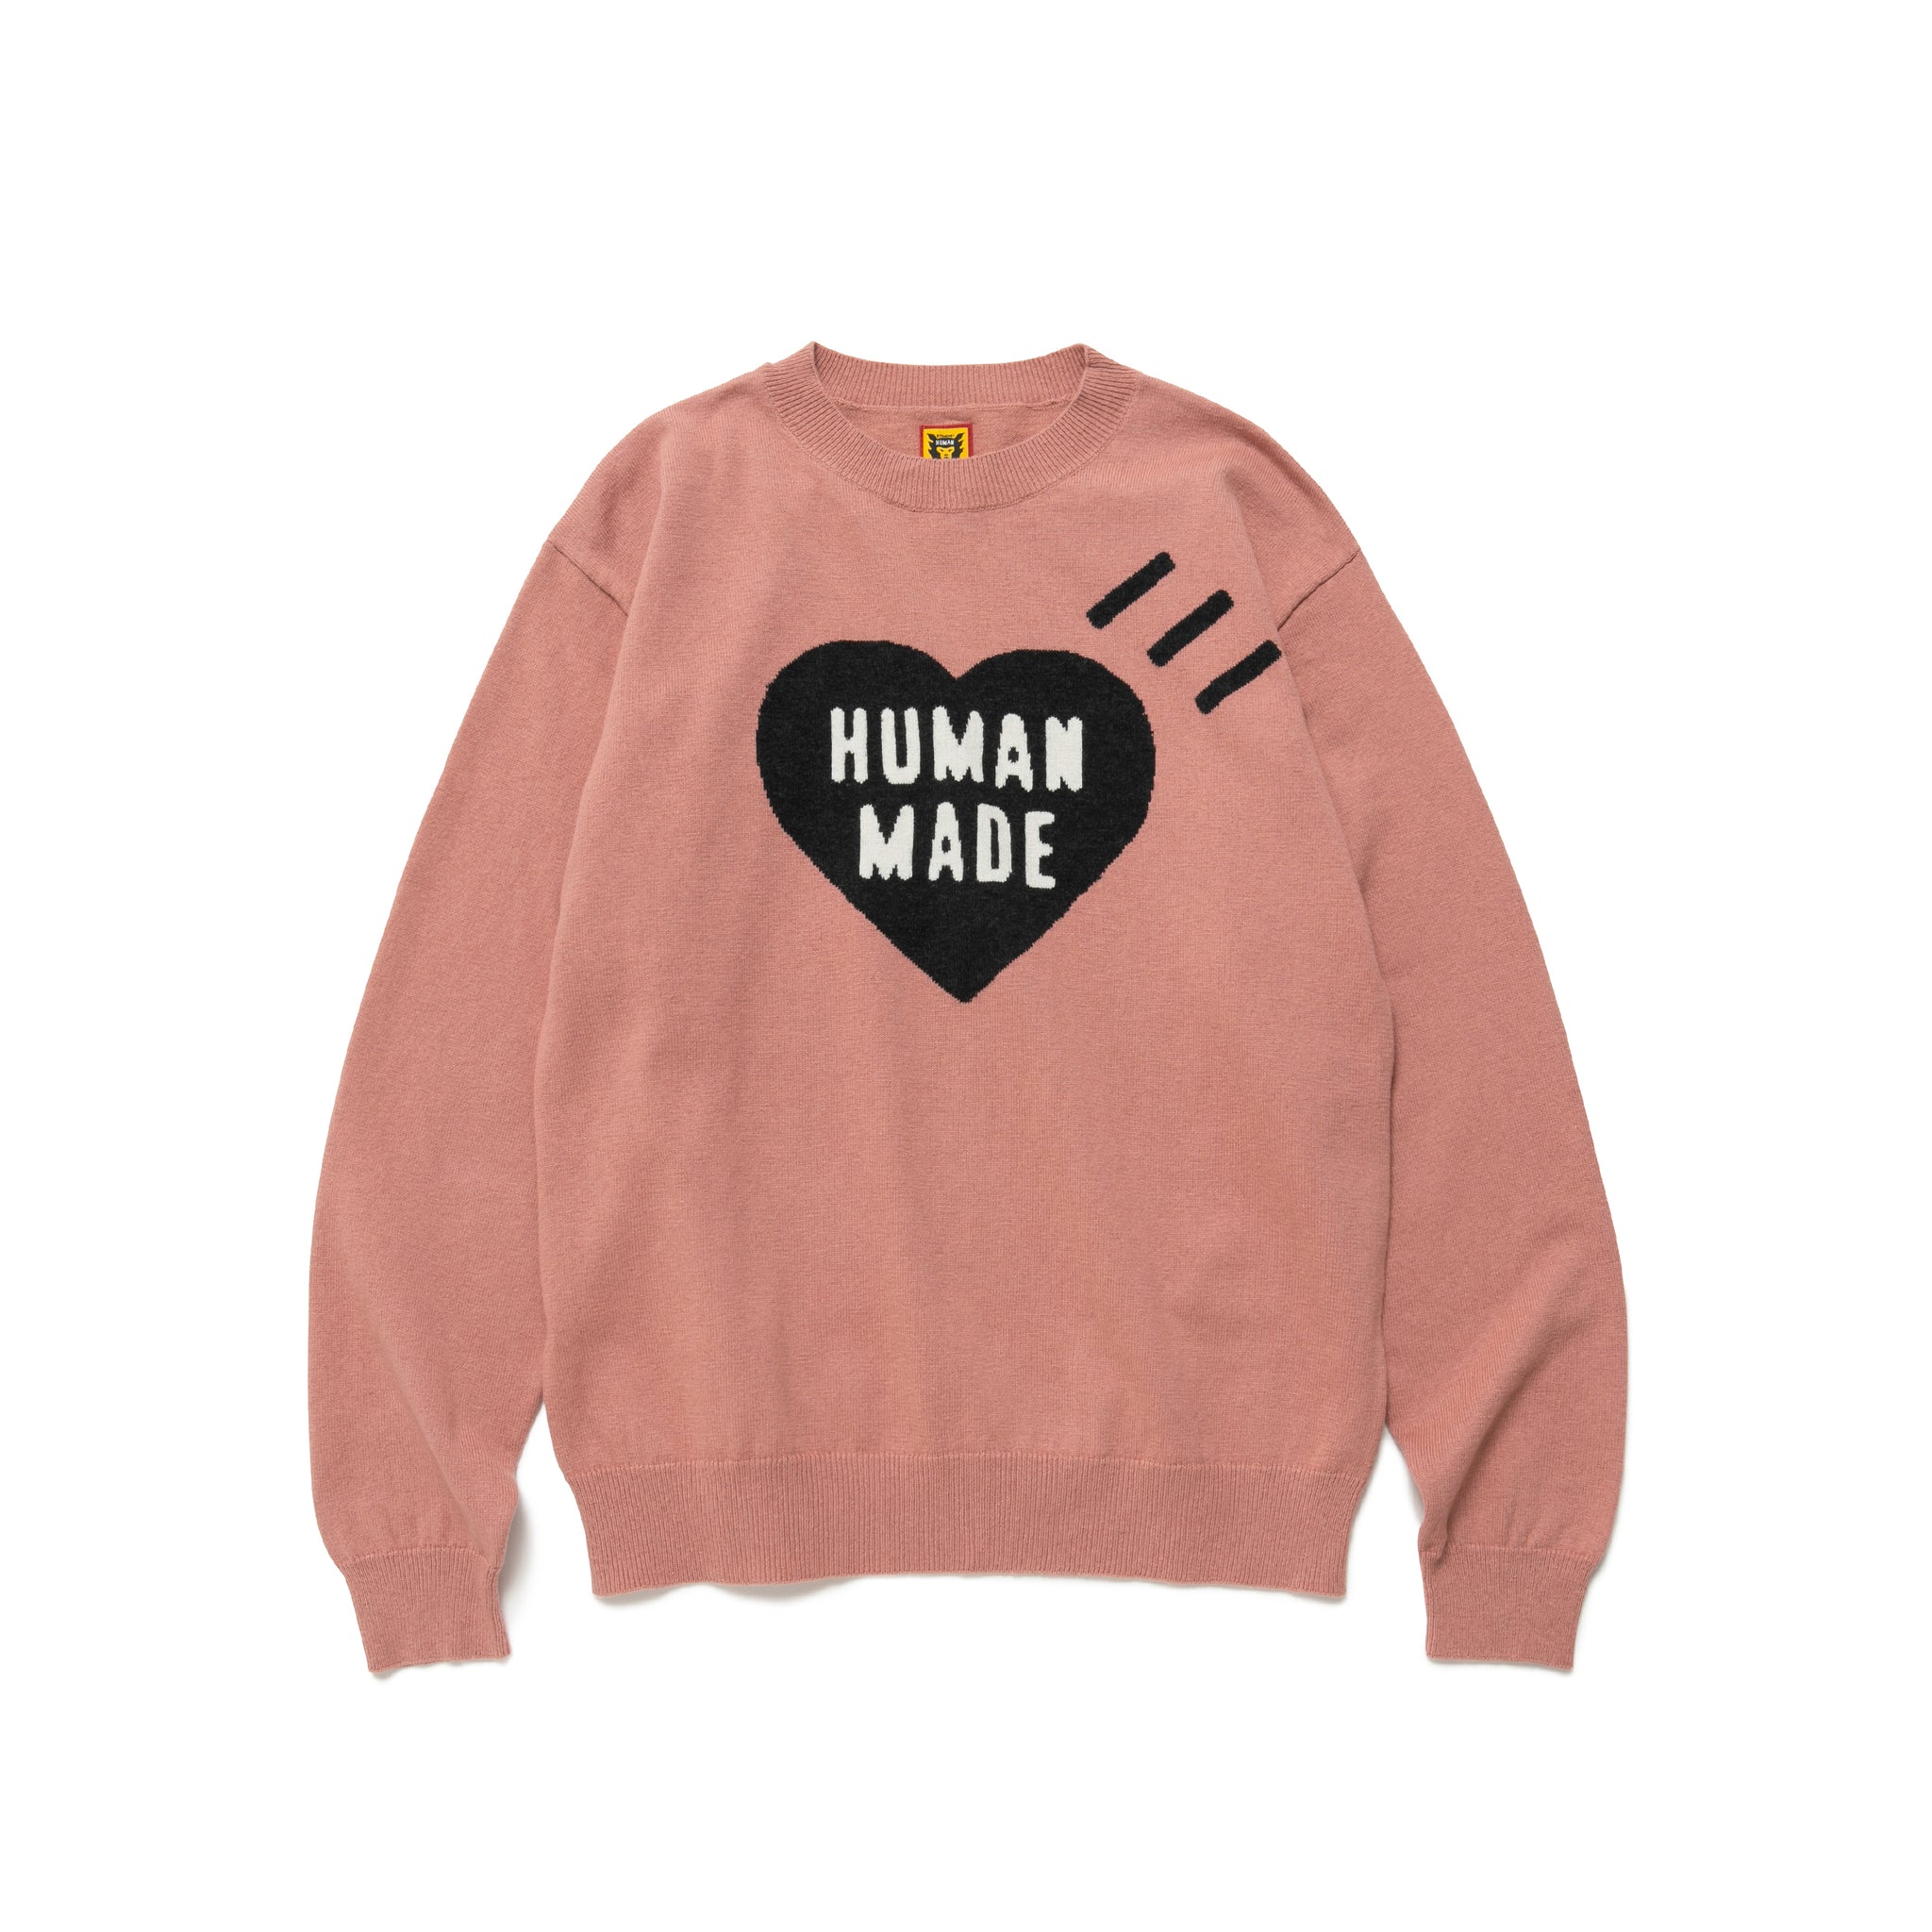 Human Made Heart Knit Sweater (L size)